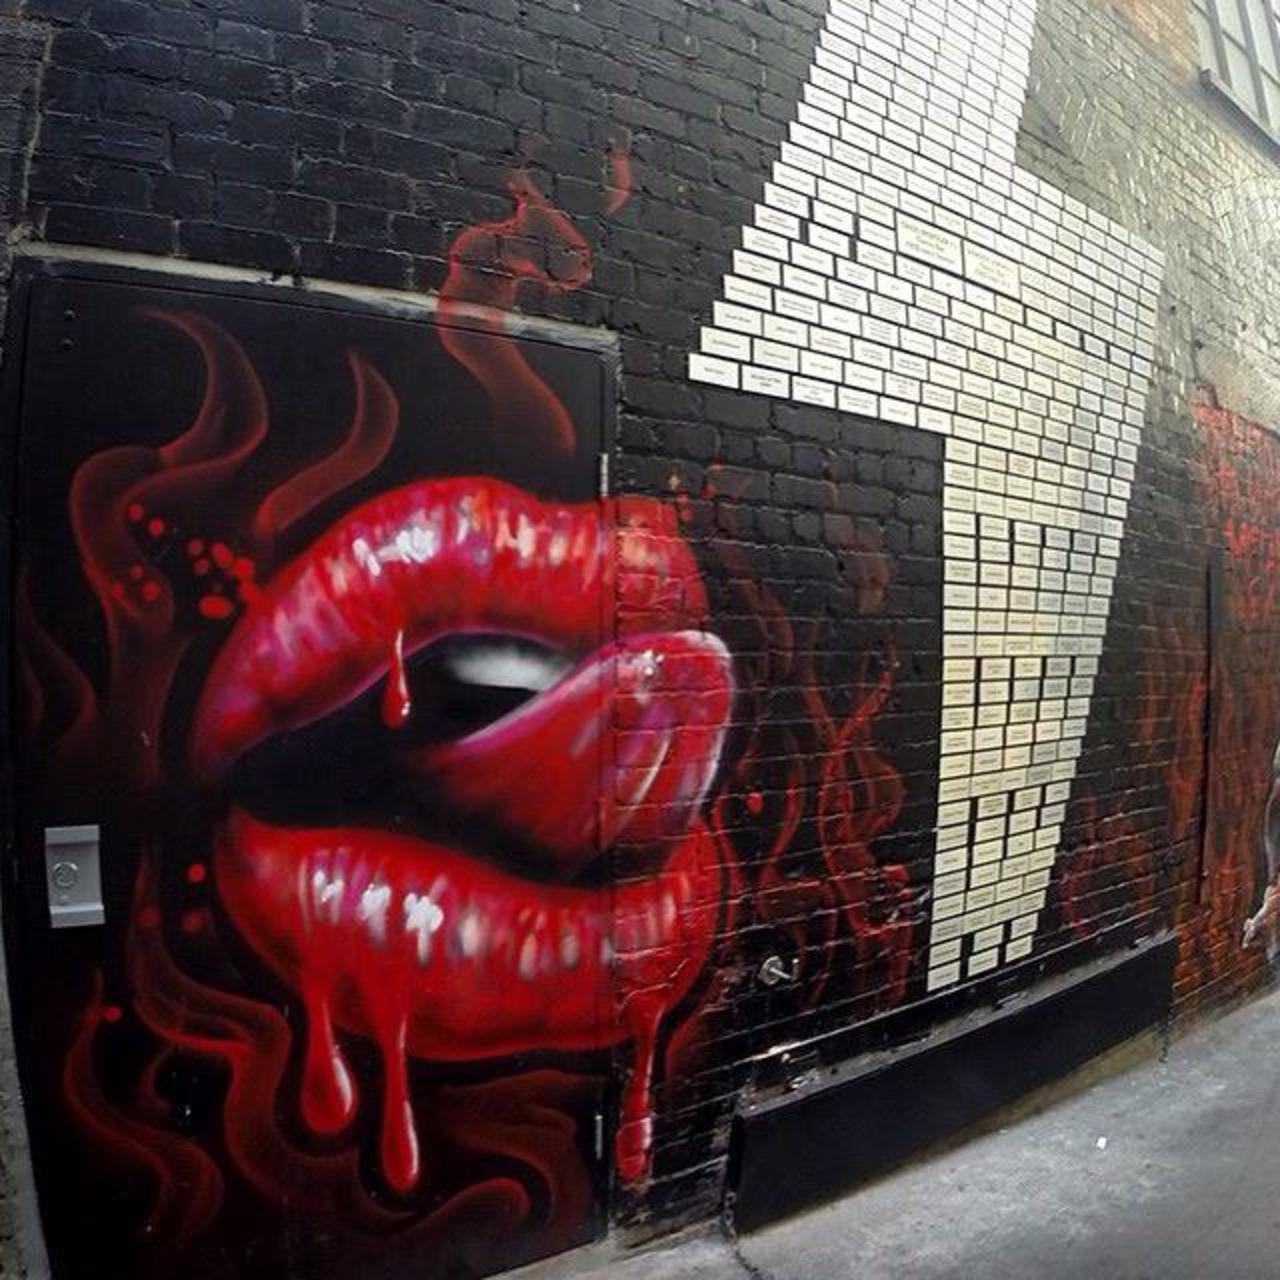 Latest Street Art by MikeMaka 

#art #arte #graffiti #streetart http://t.co/CrDAF0ZAET